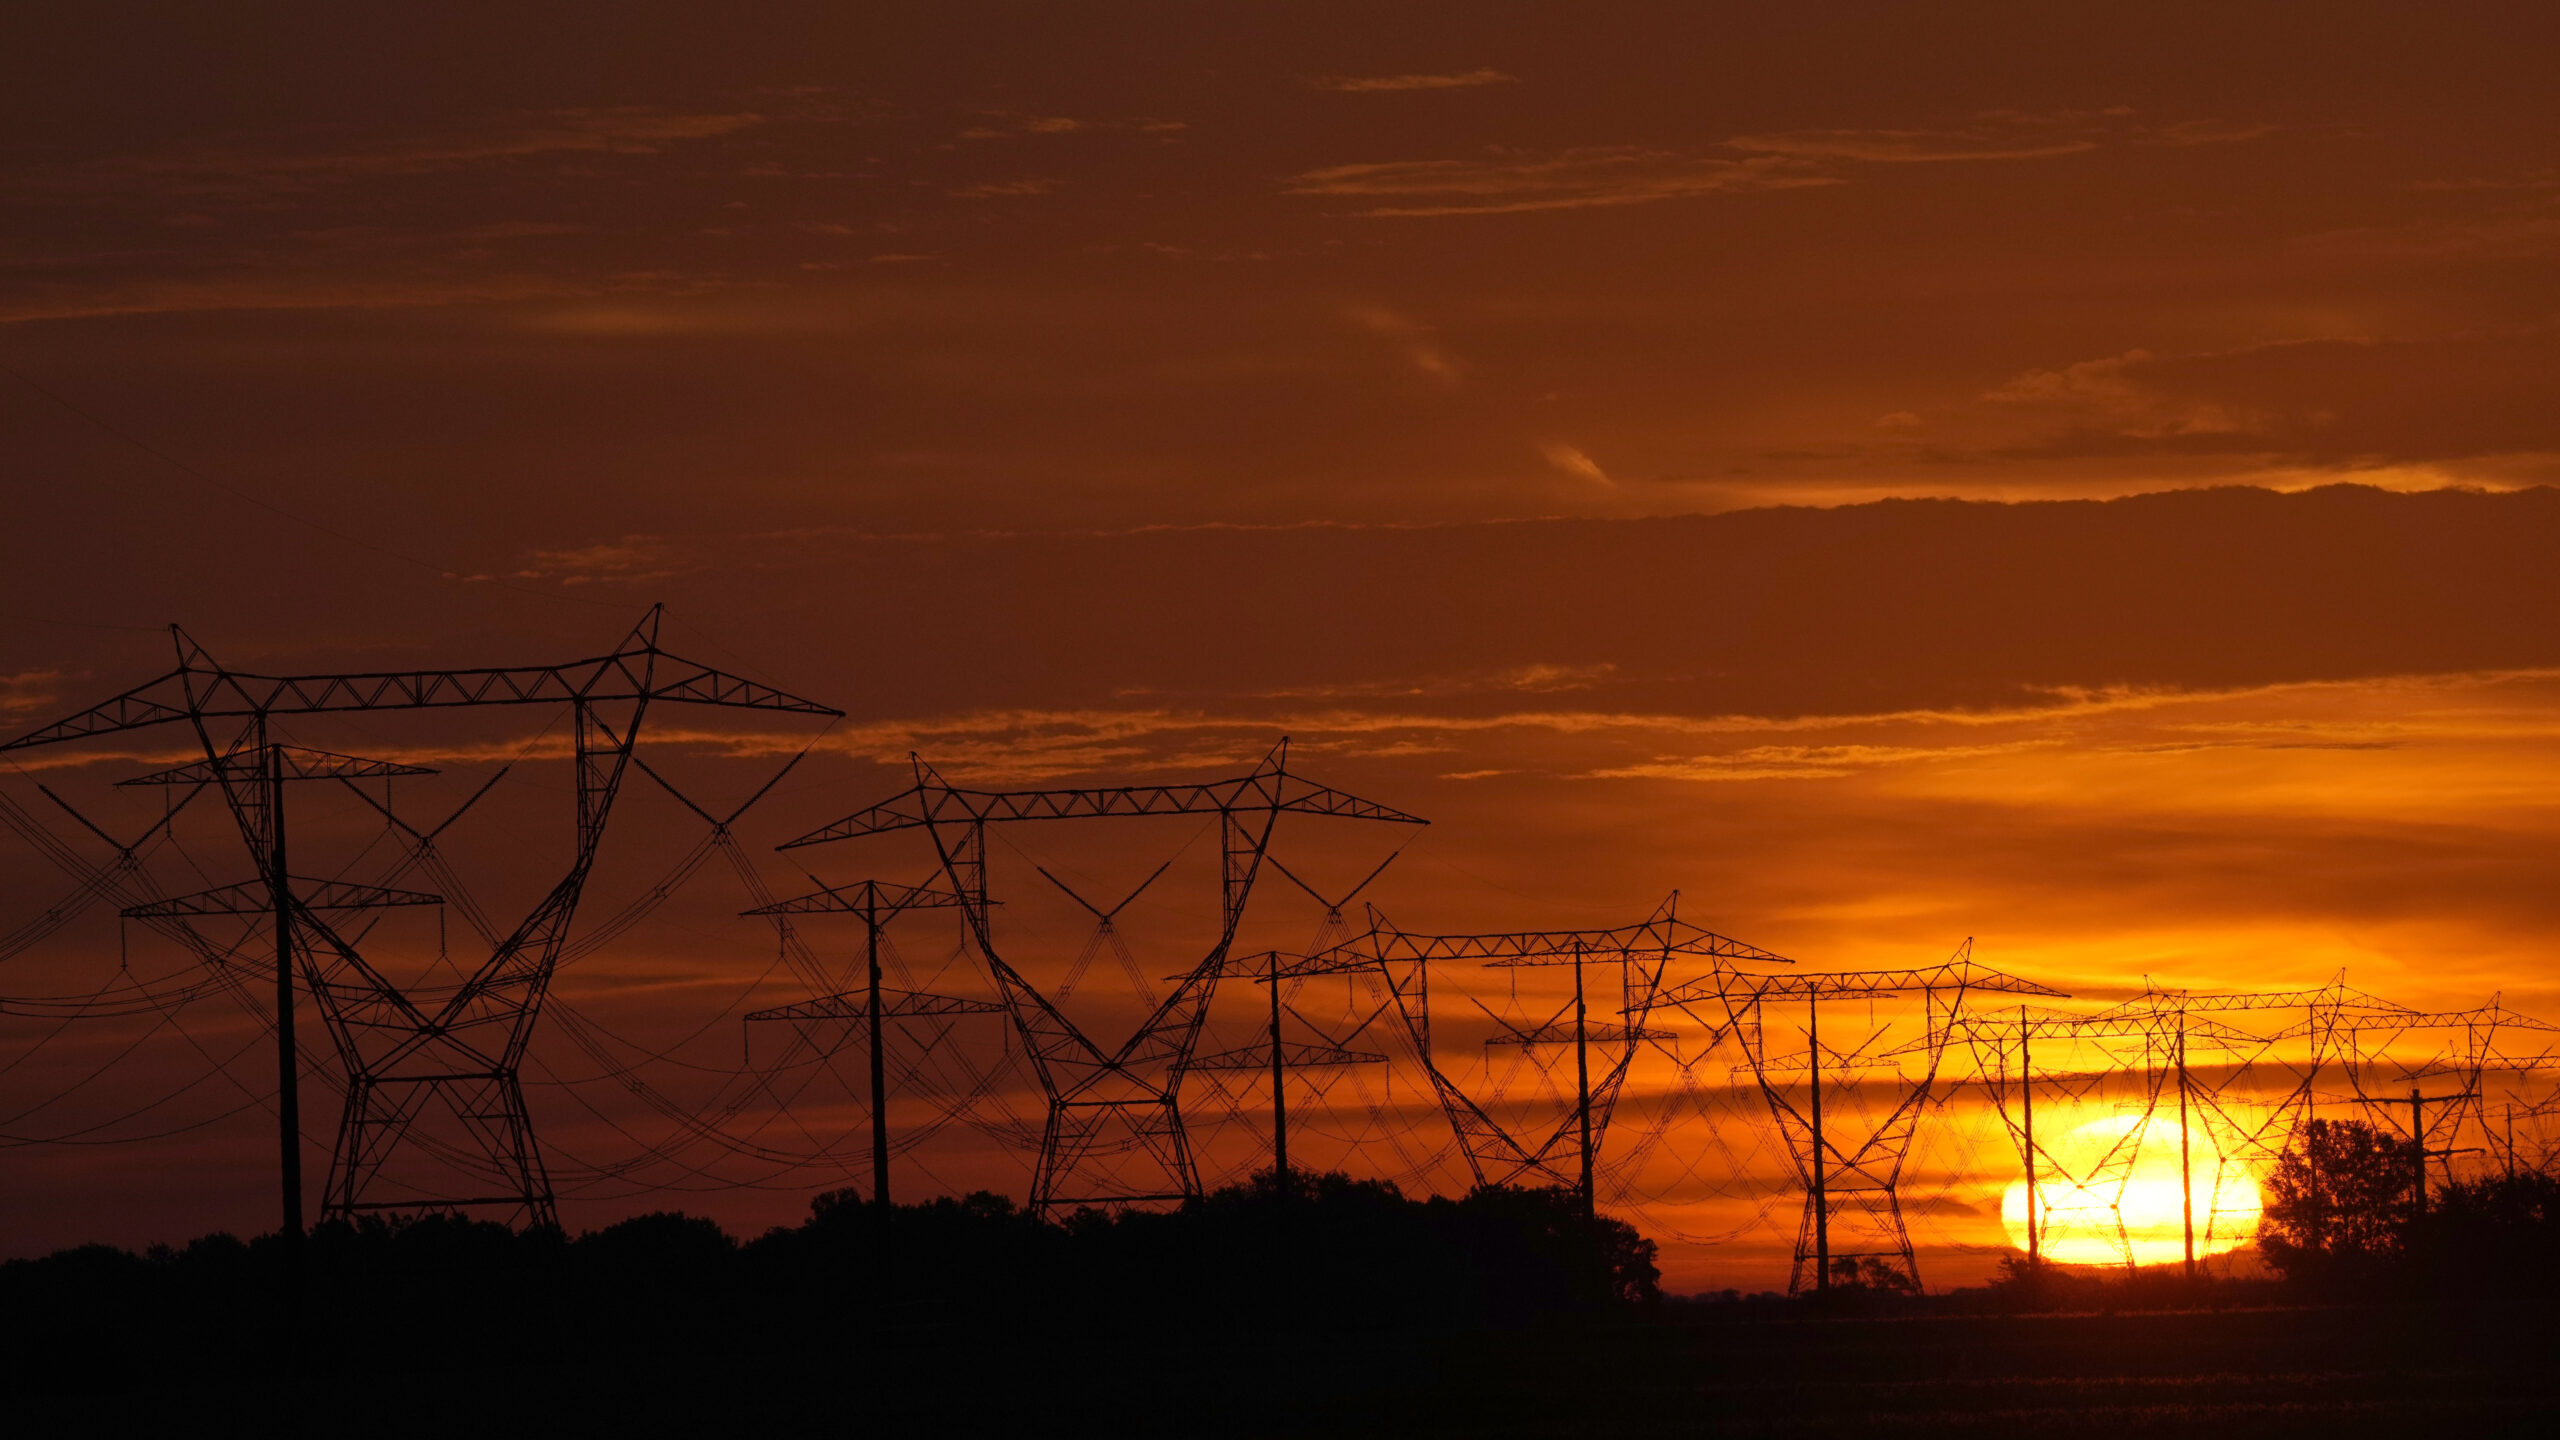 Energy regulators overhaul transmission rules in bid to accelerate clean power [Video]